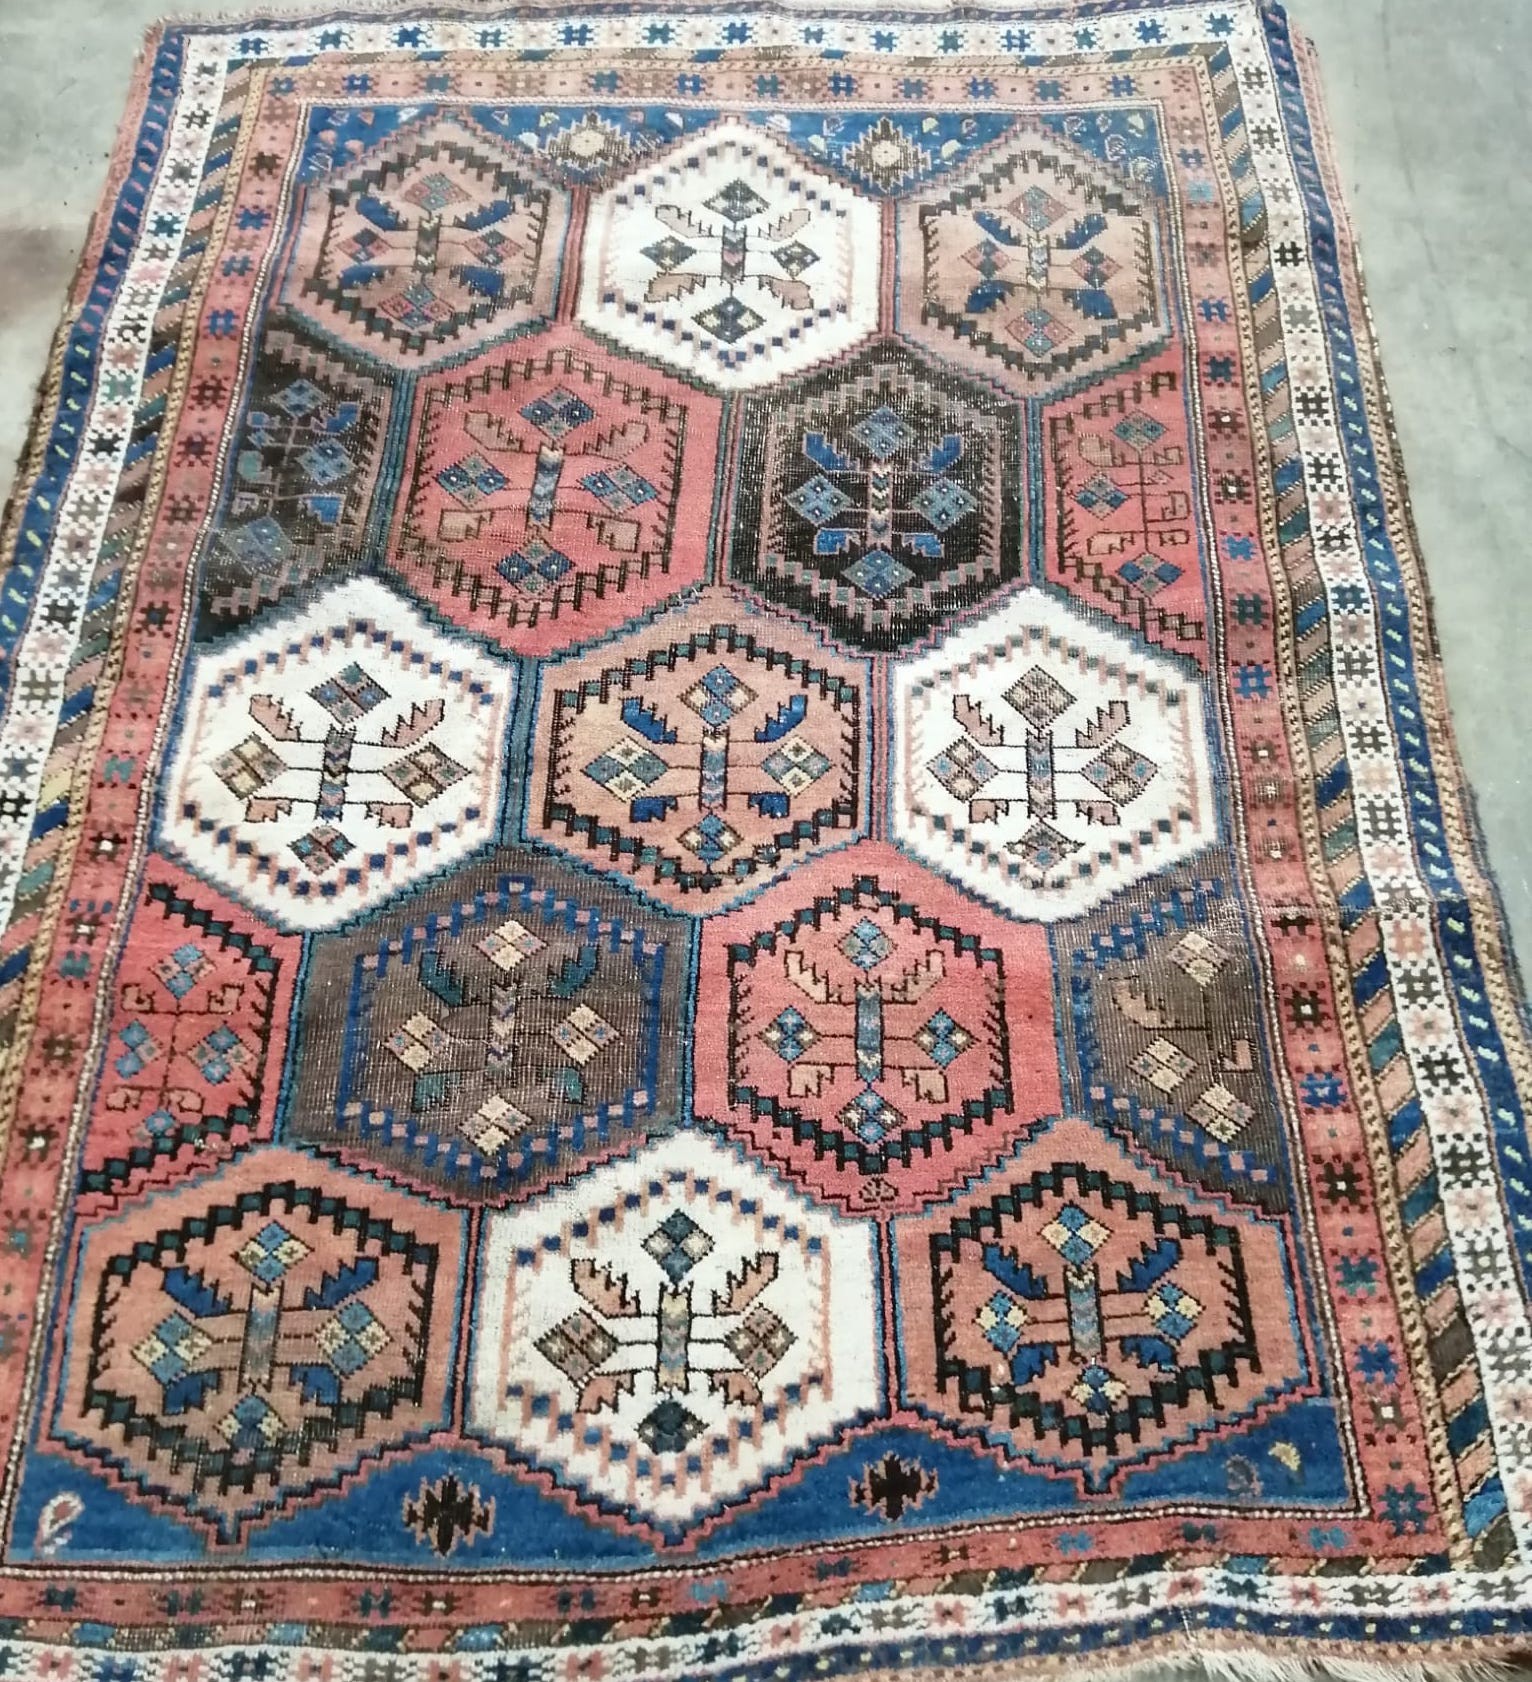 An early 20th century Caucasian blue ground rug woven rows of hexagonal medallions,162 x 124cm